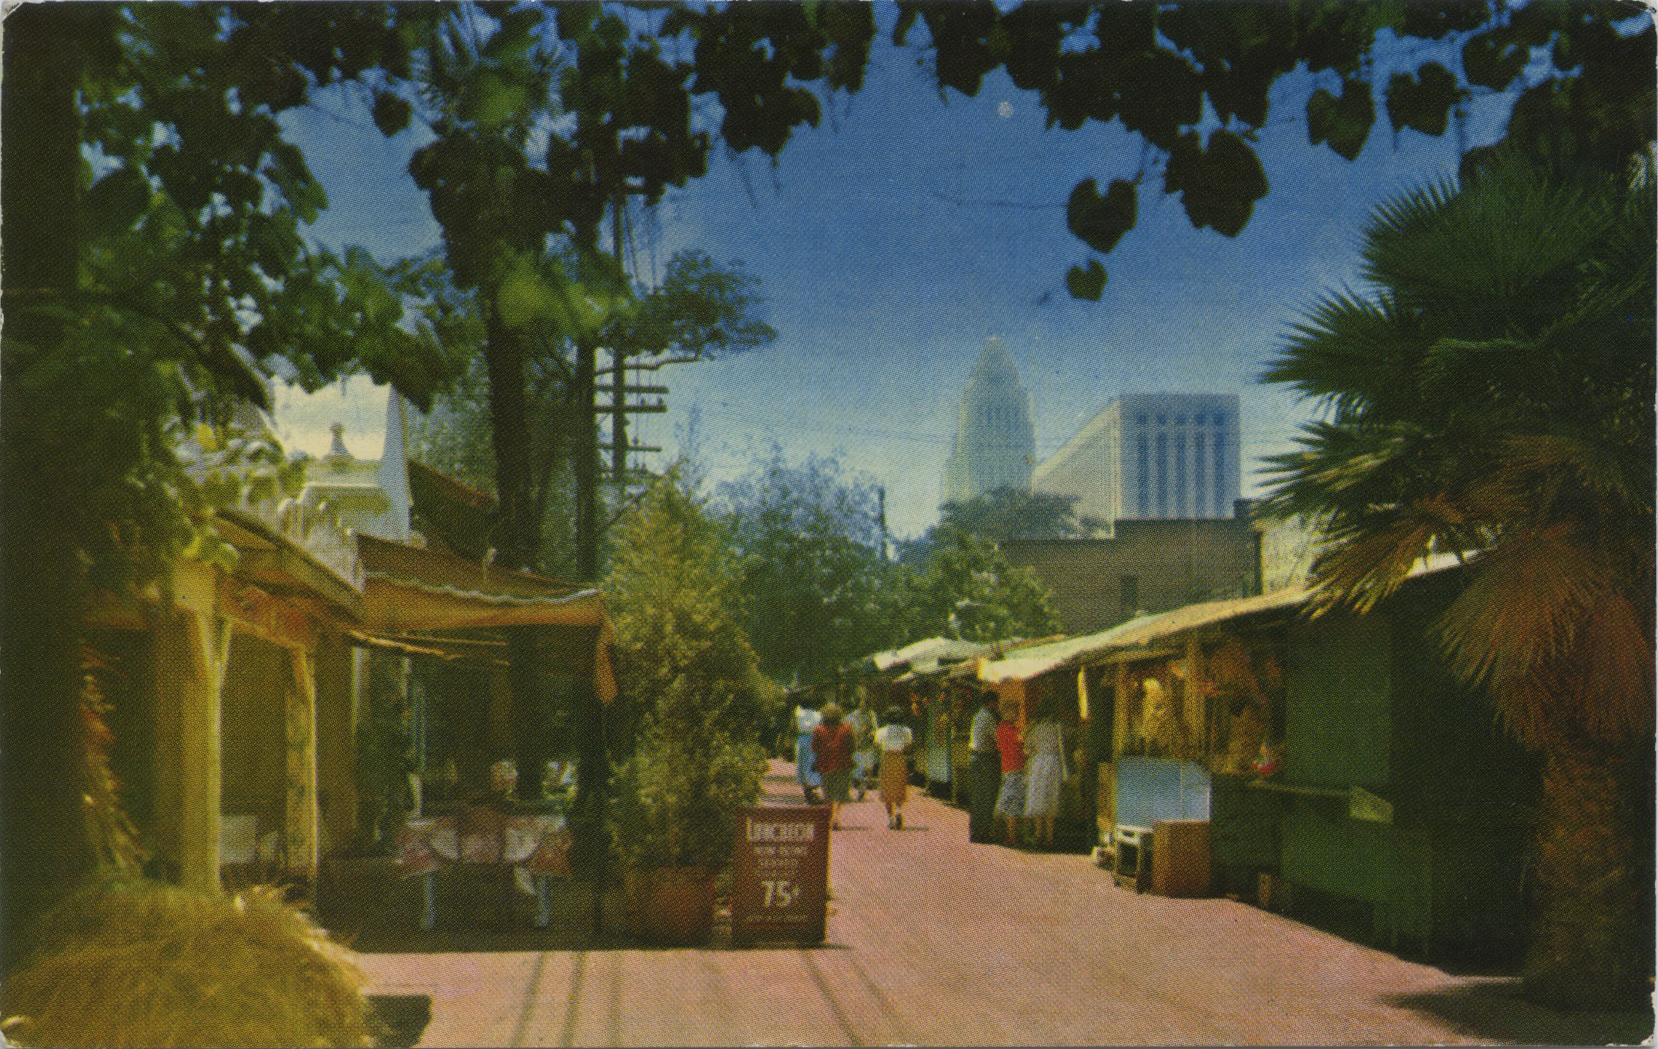 Postcard of Olvera Street